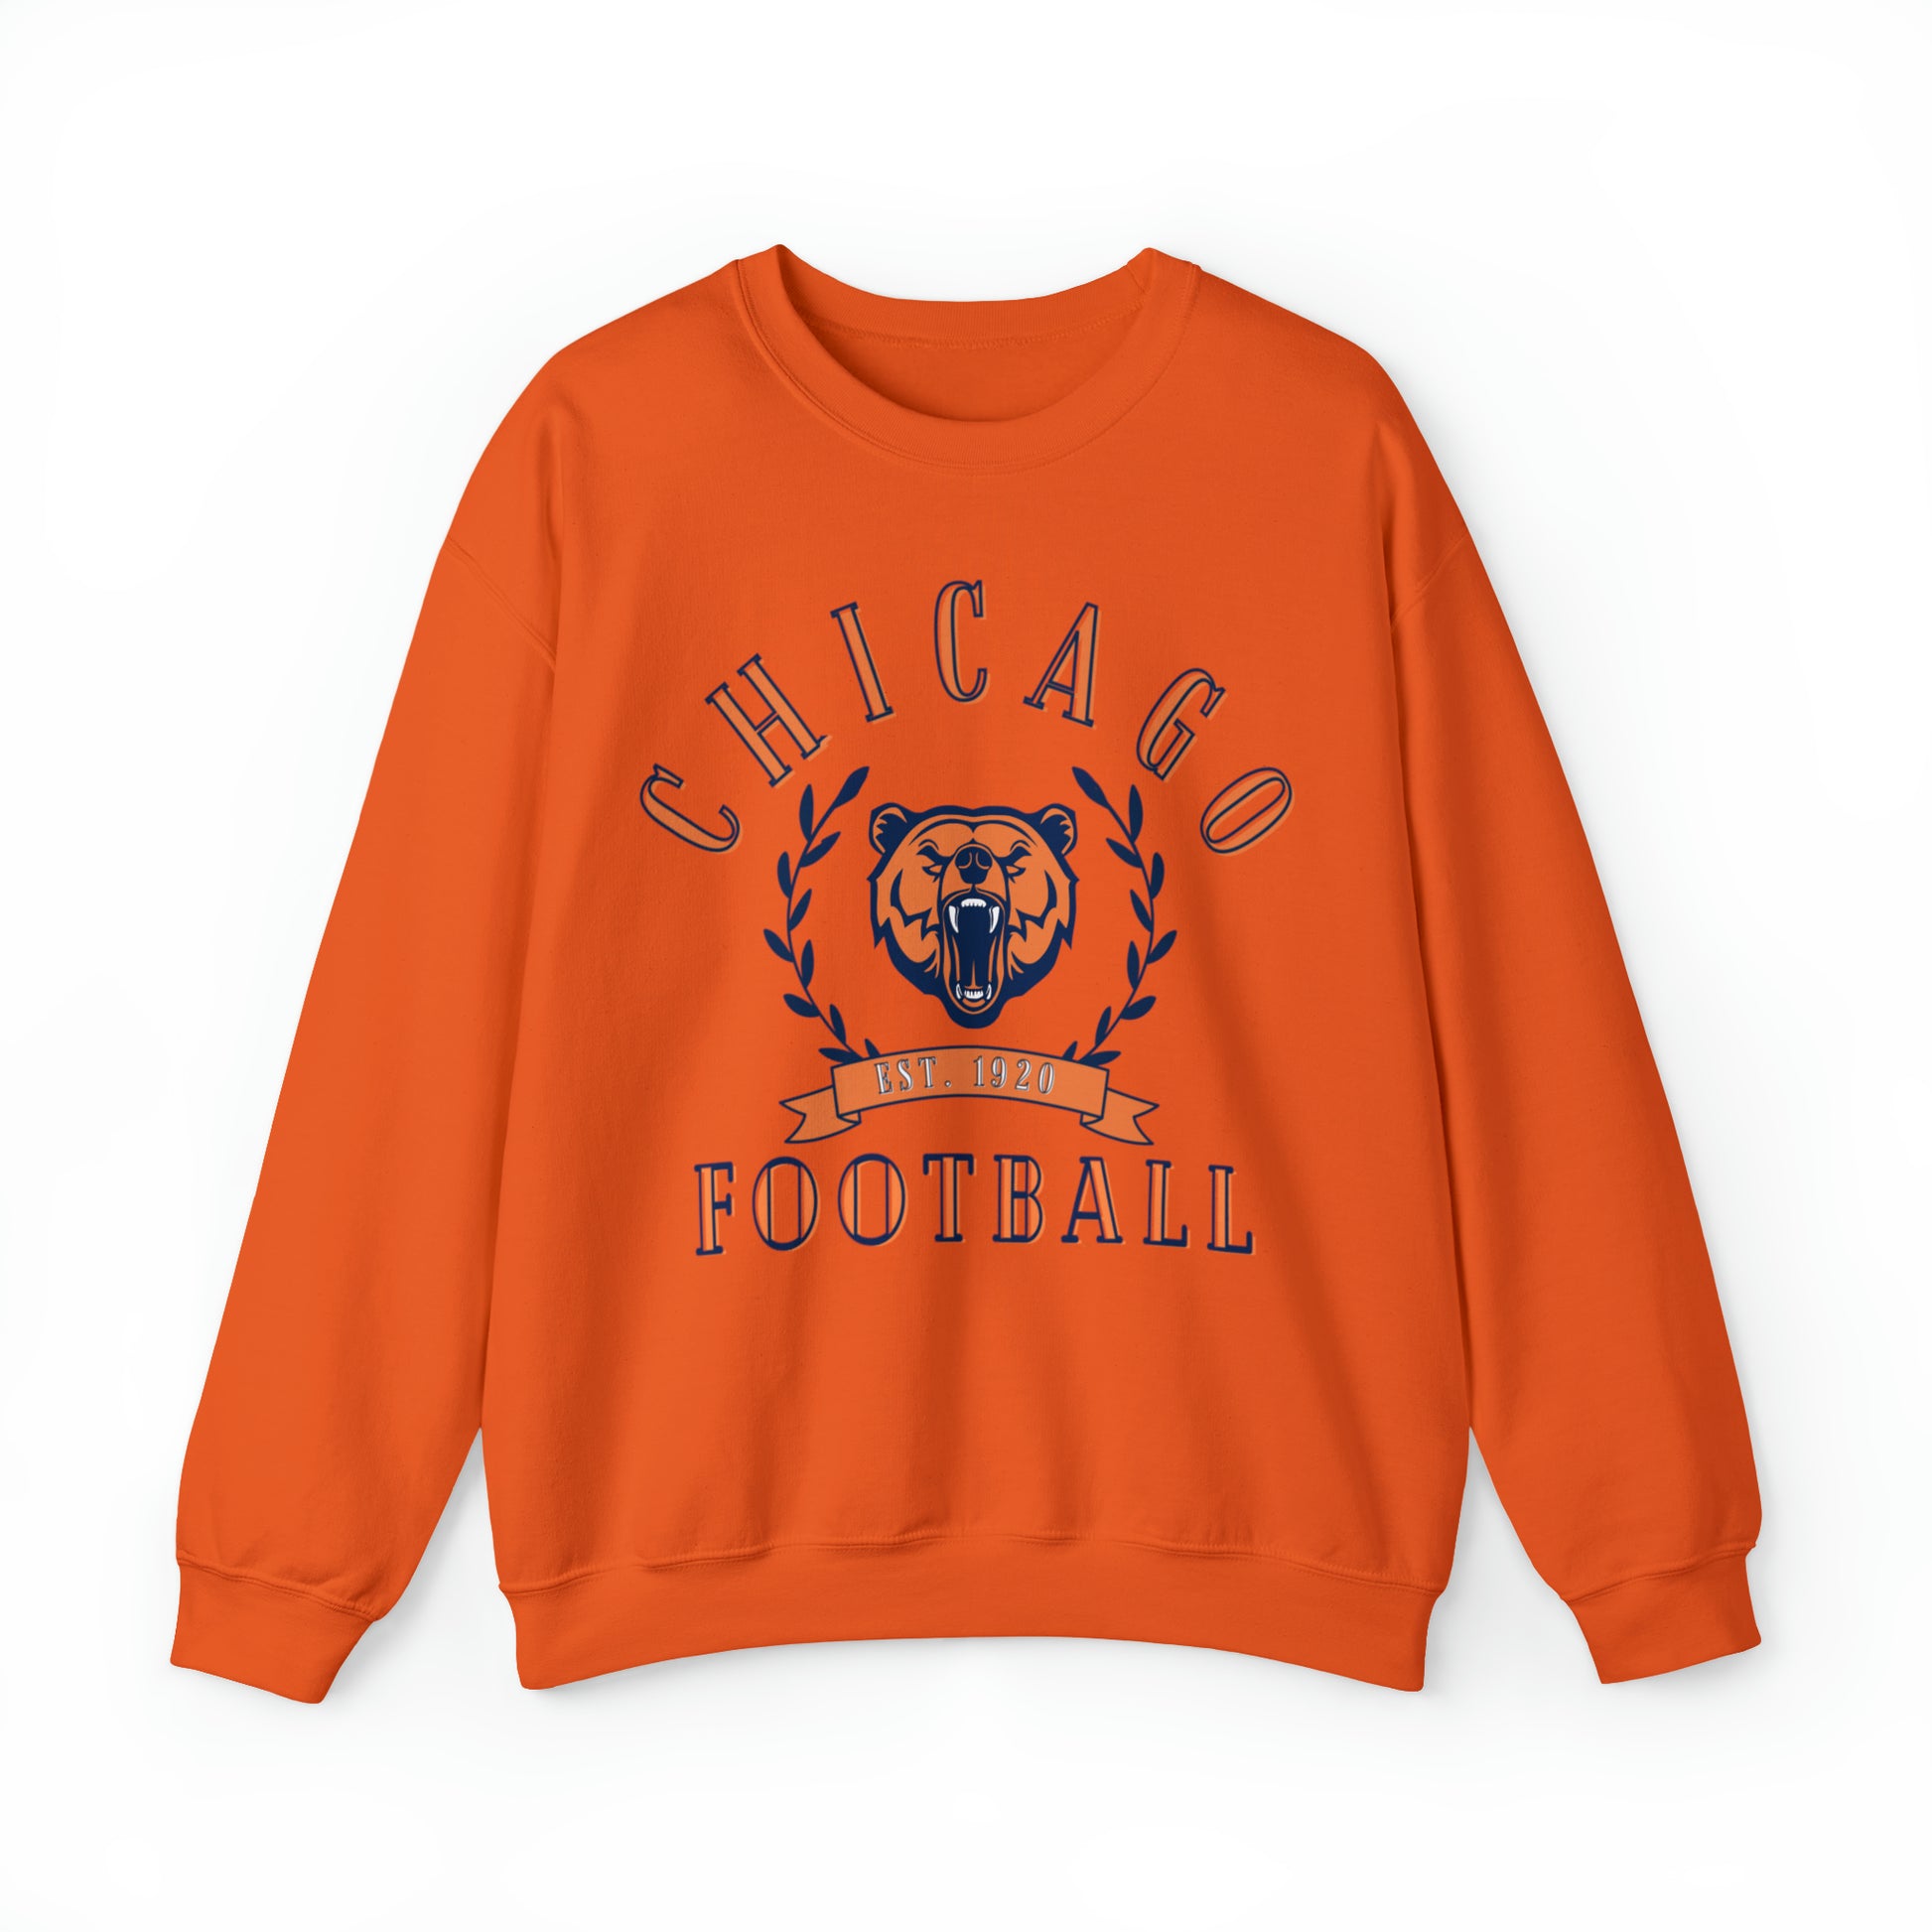 Chicago Bears Crewneck Sweatshirt - Vintage Football - Retro Style Football Apparel - Design 3